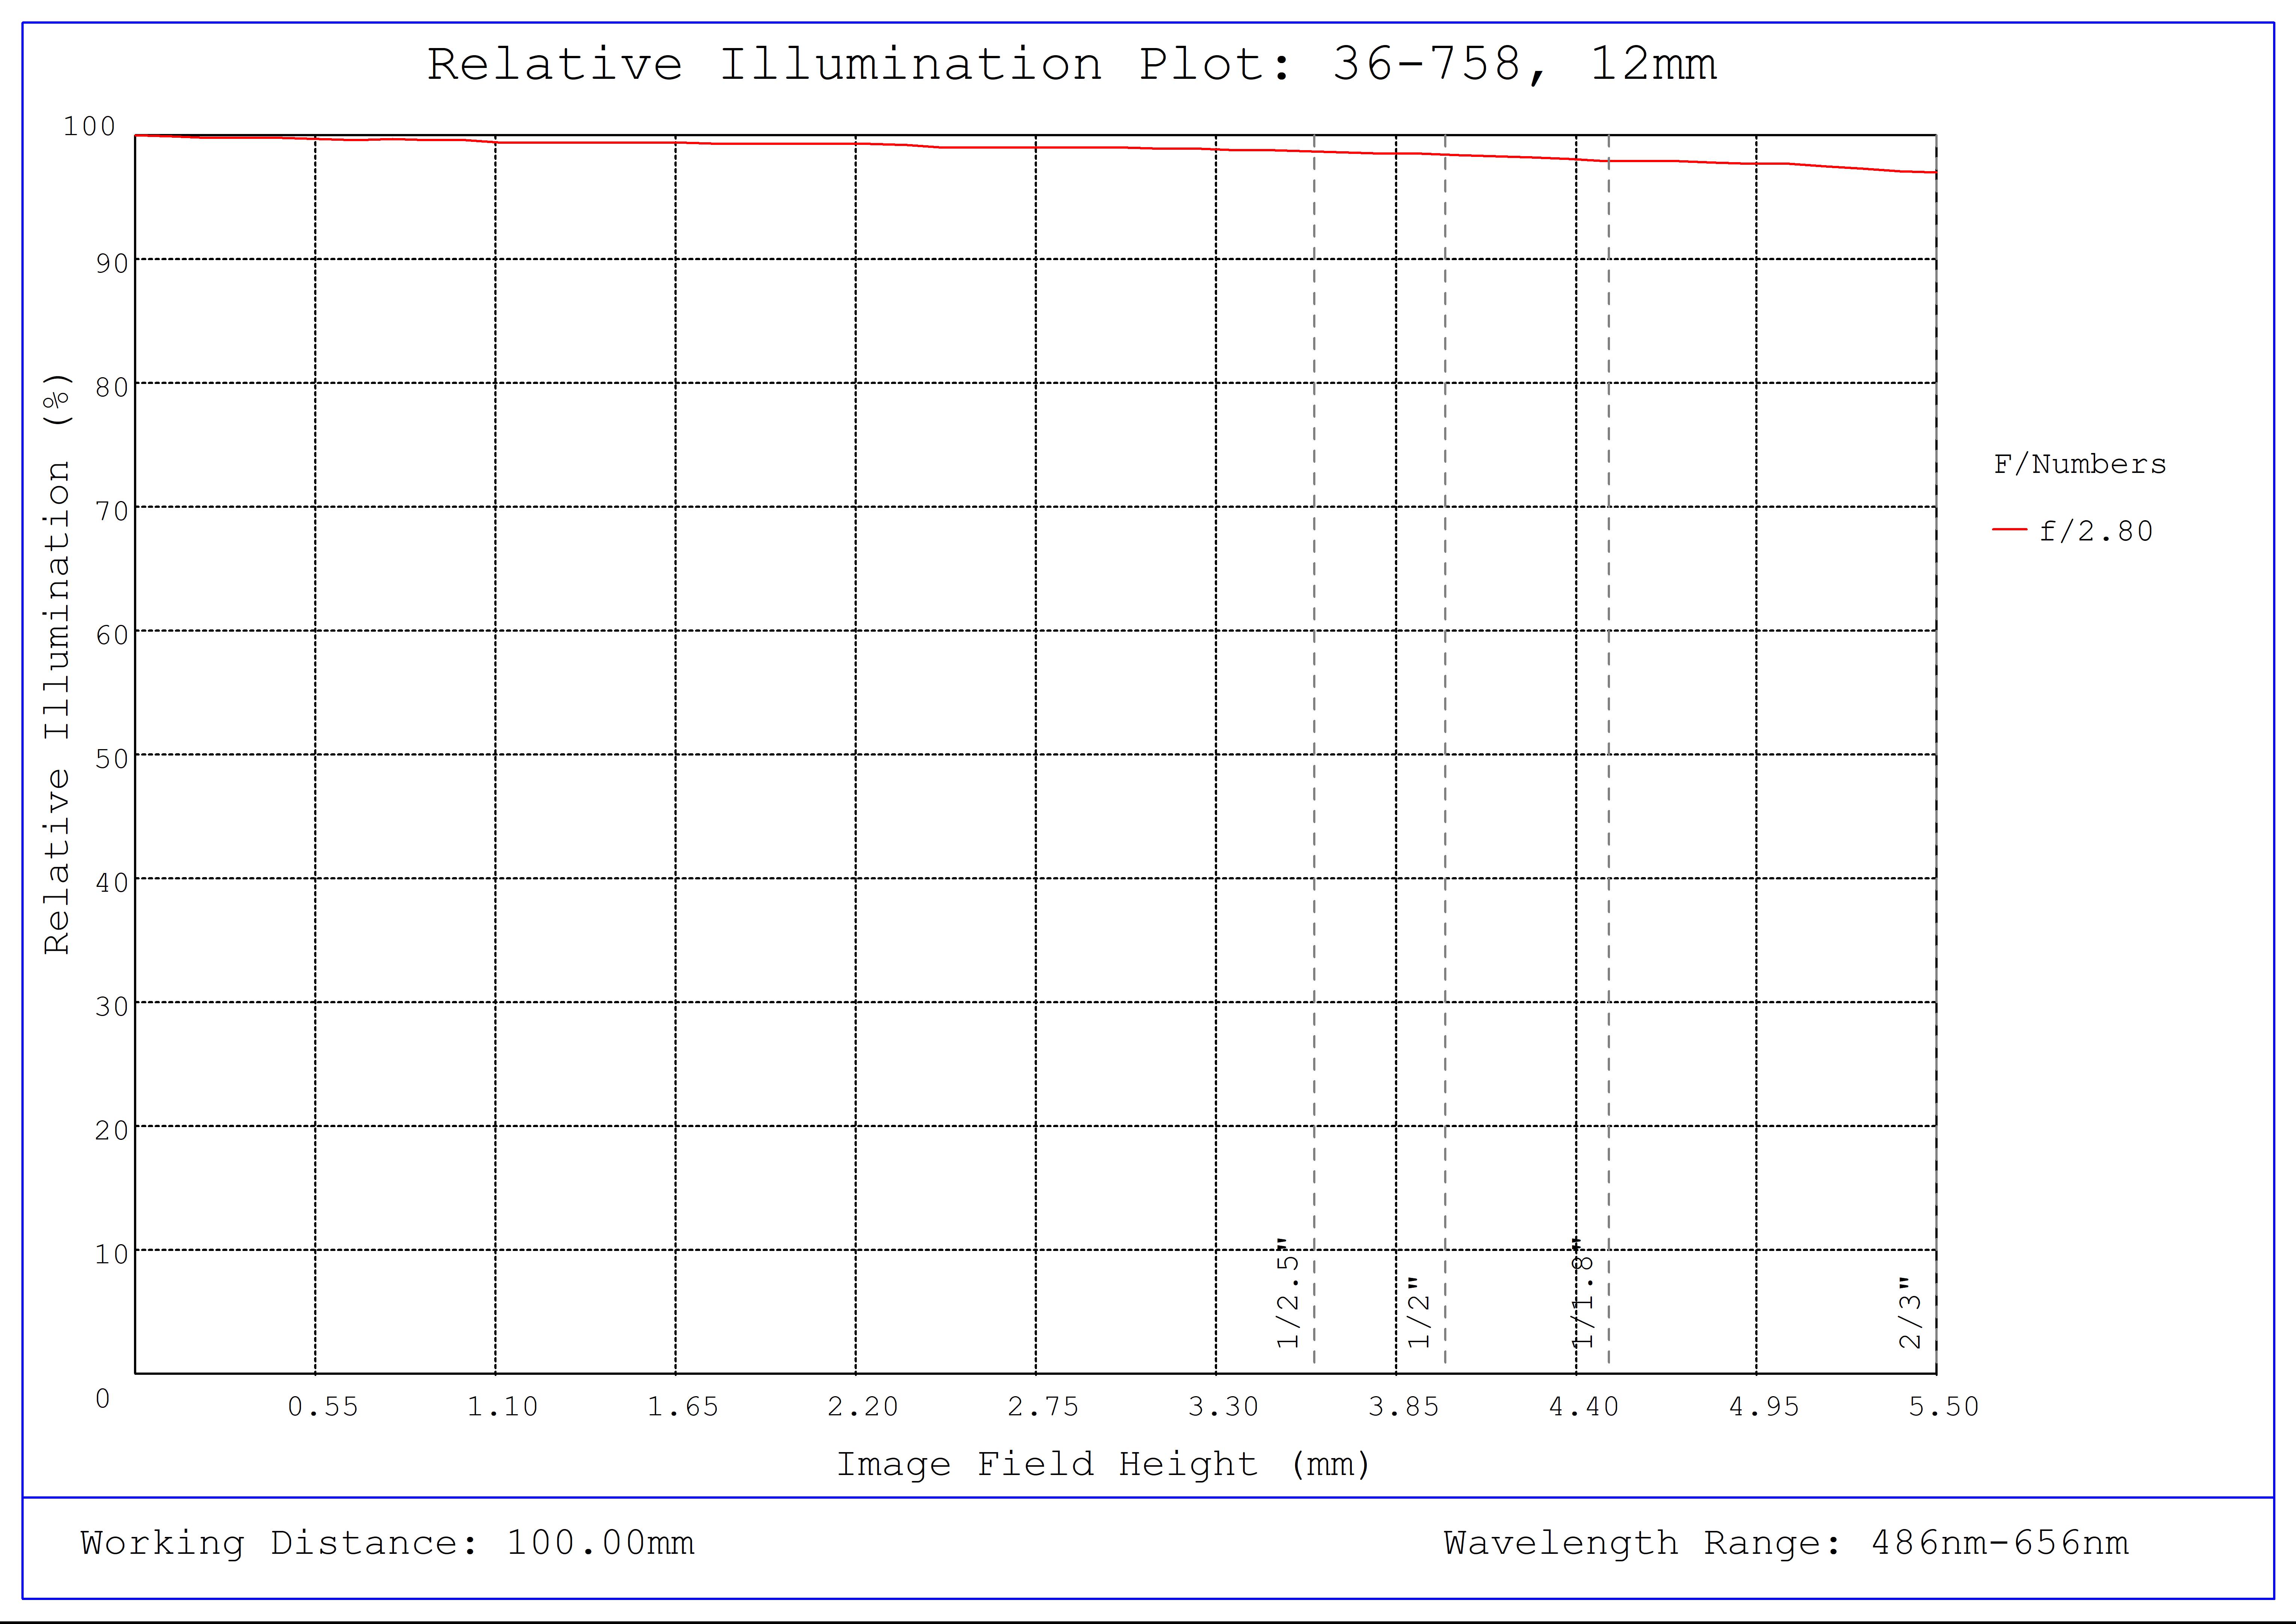 #36-758, 12mm f/2.8, 400-2000mm Primary WD, HRi Series Fixed Focal Length Lens, Relative Illumination Plot